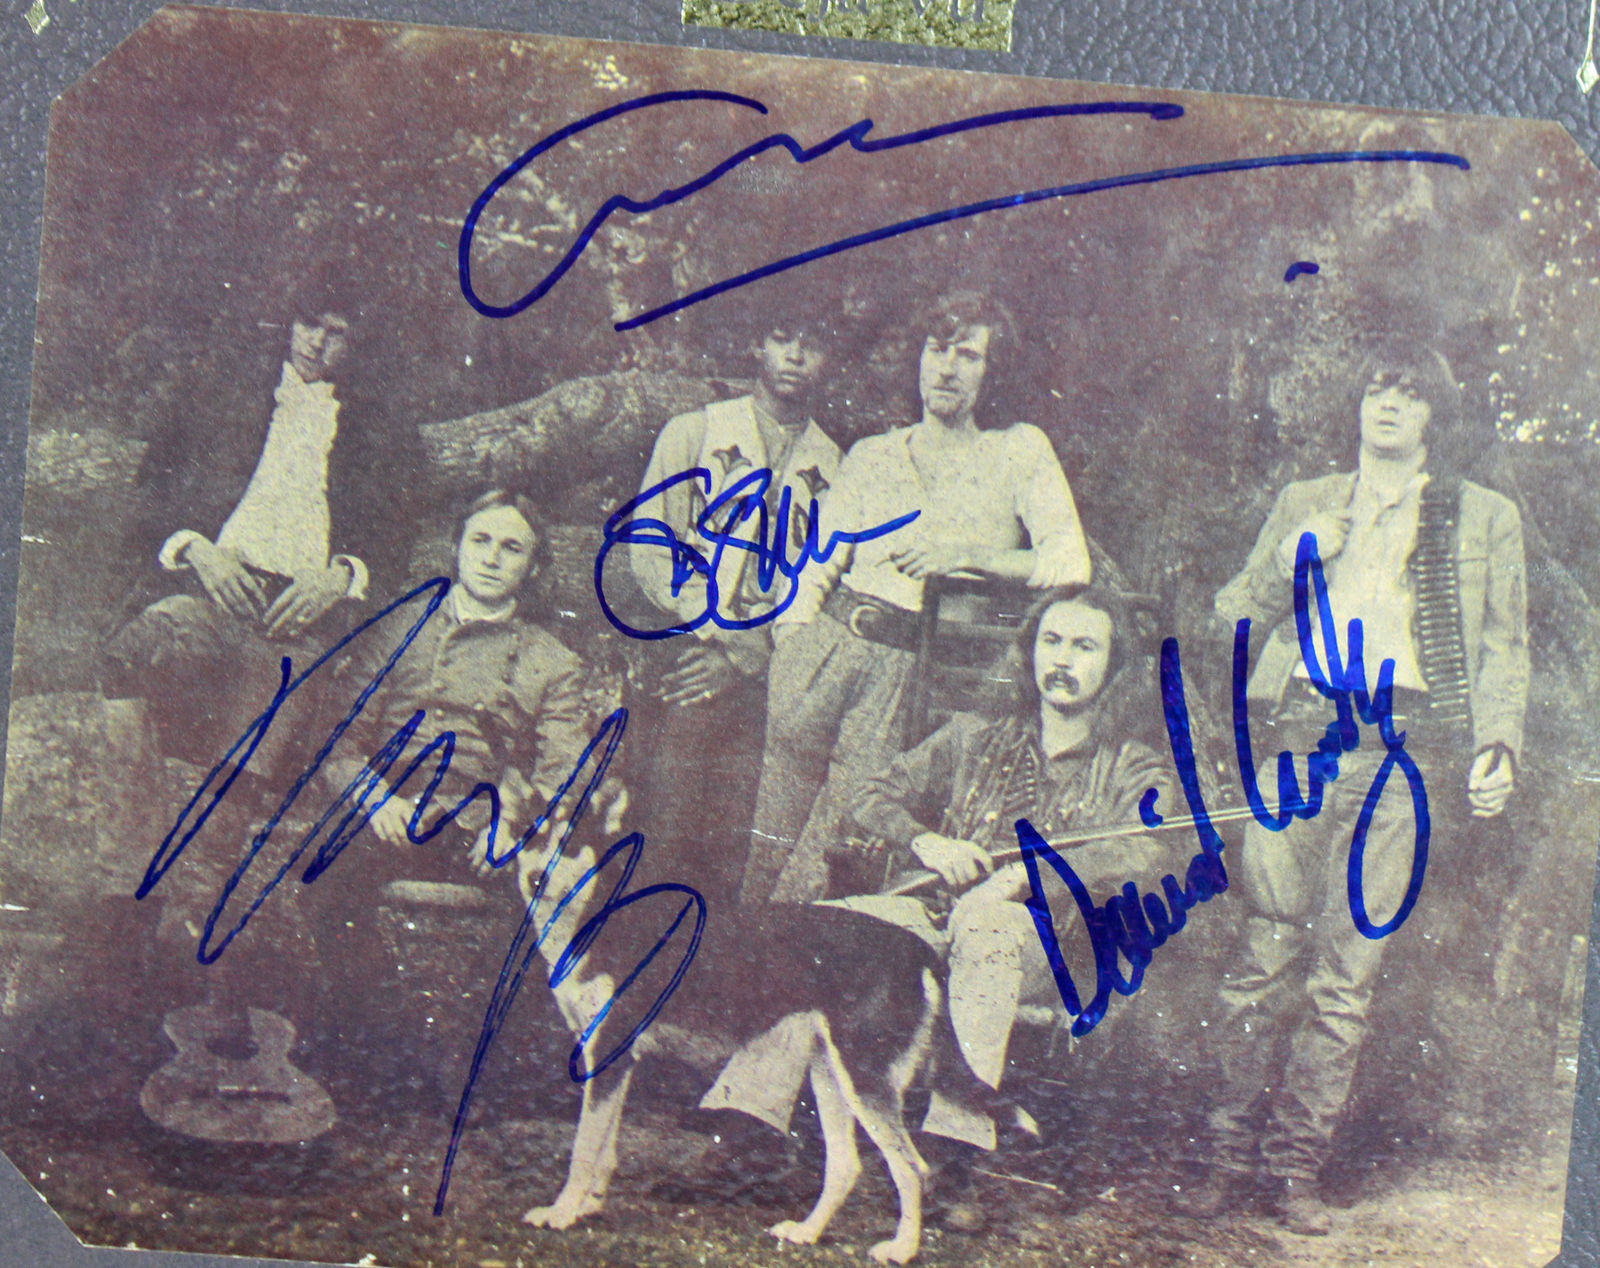 Crosby Stills & Nash Autographed Lp 